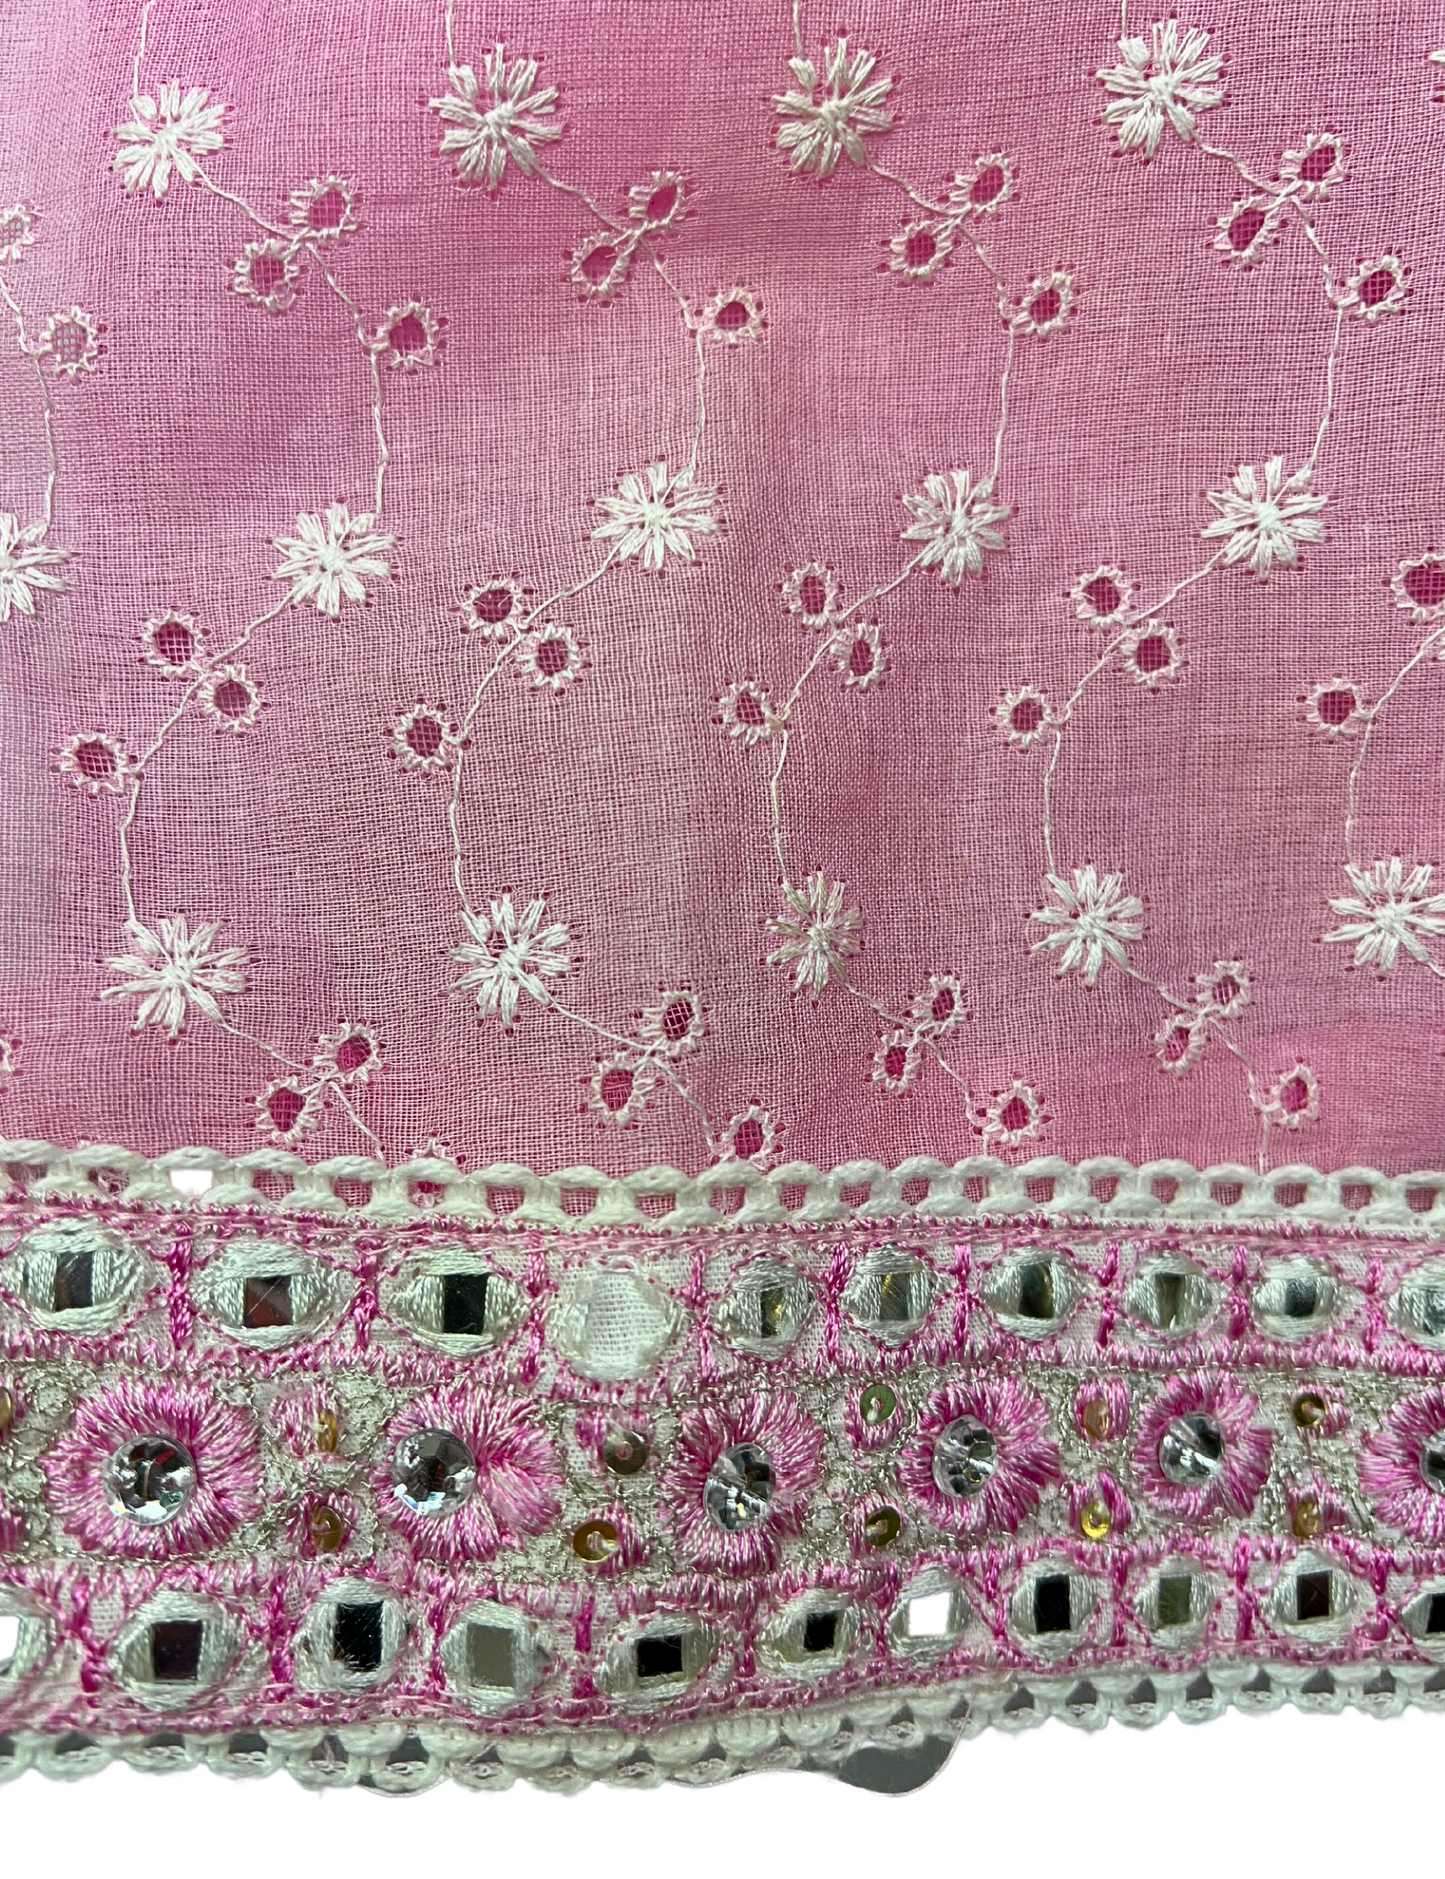 90’s Pink Eyelet Embroidered Lucknowi Chikankari Kurta Tank Top